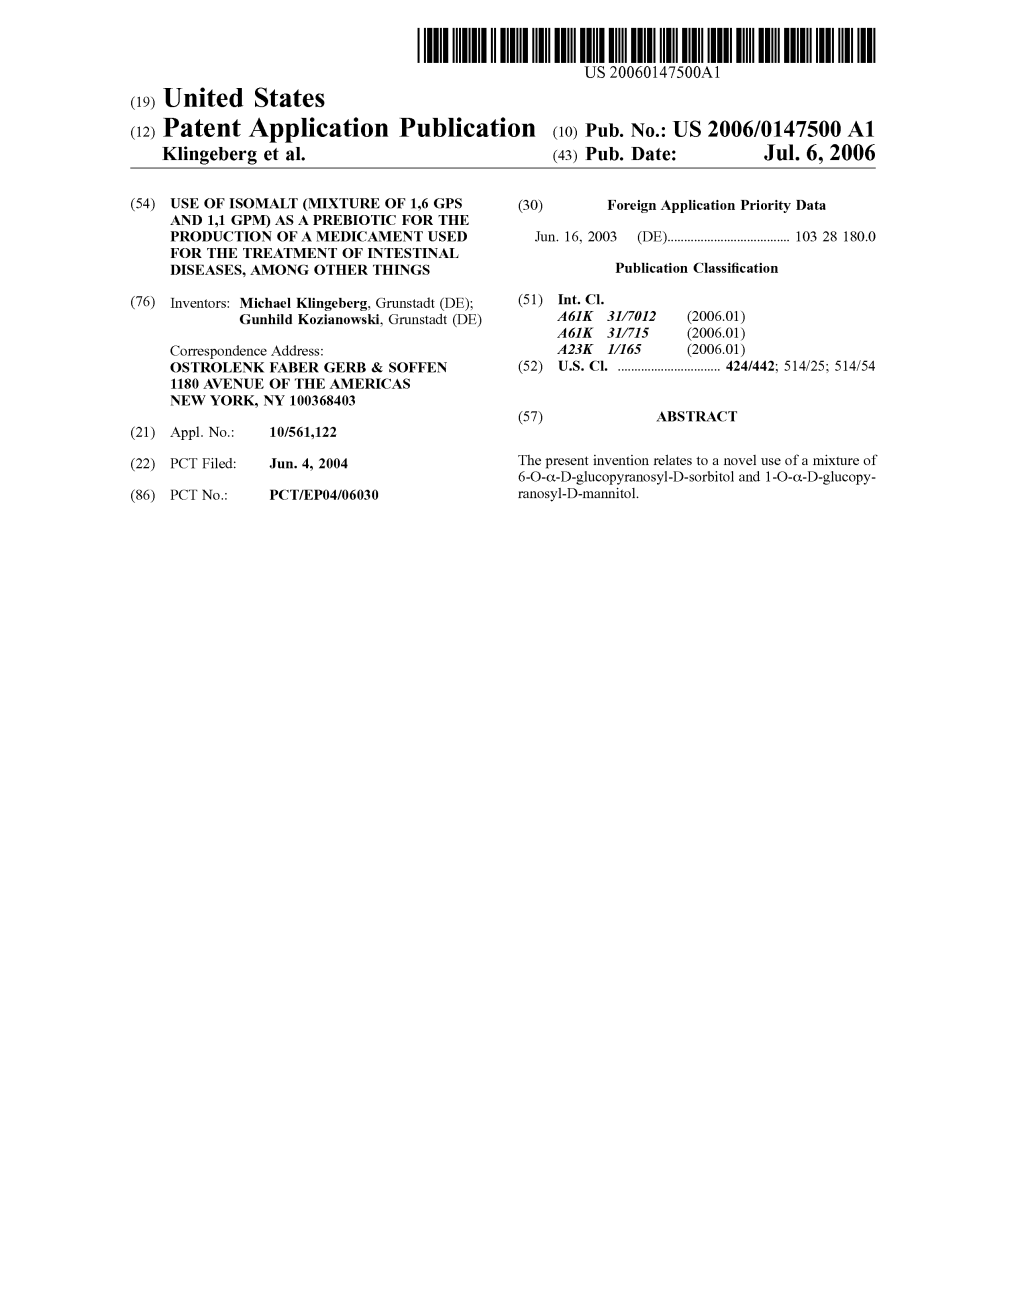 (12) Patent Application Publication (10) Pub. No.: US 2006/0147500 A1 Klingeberg Et Al